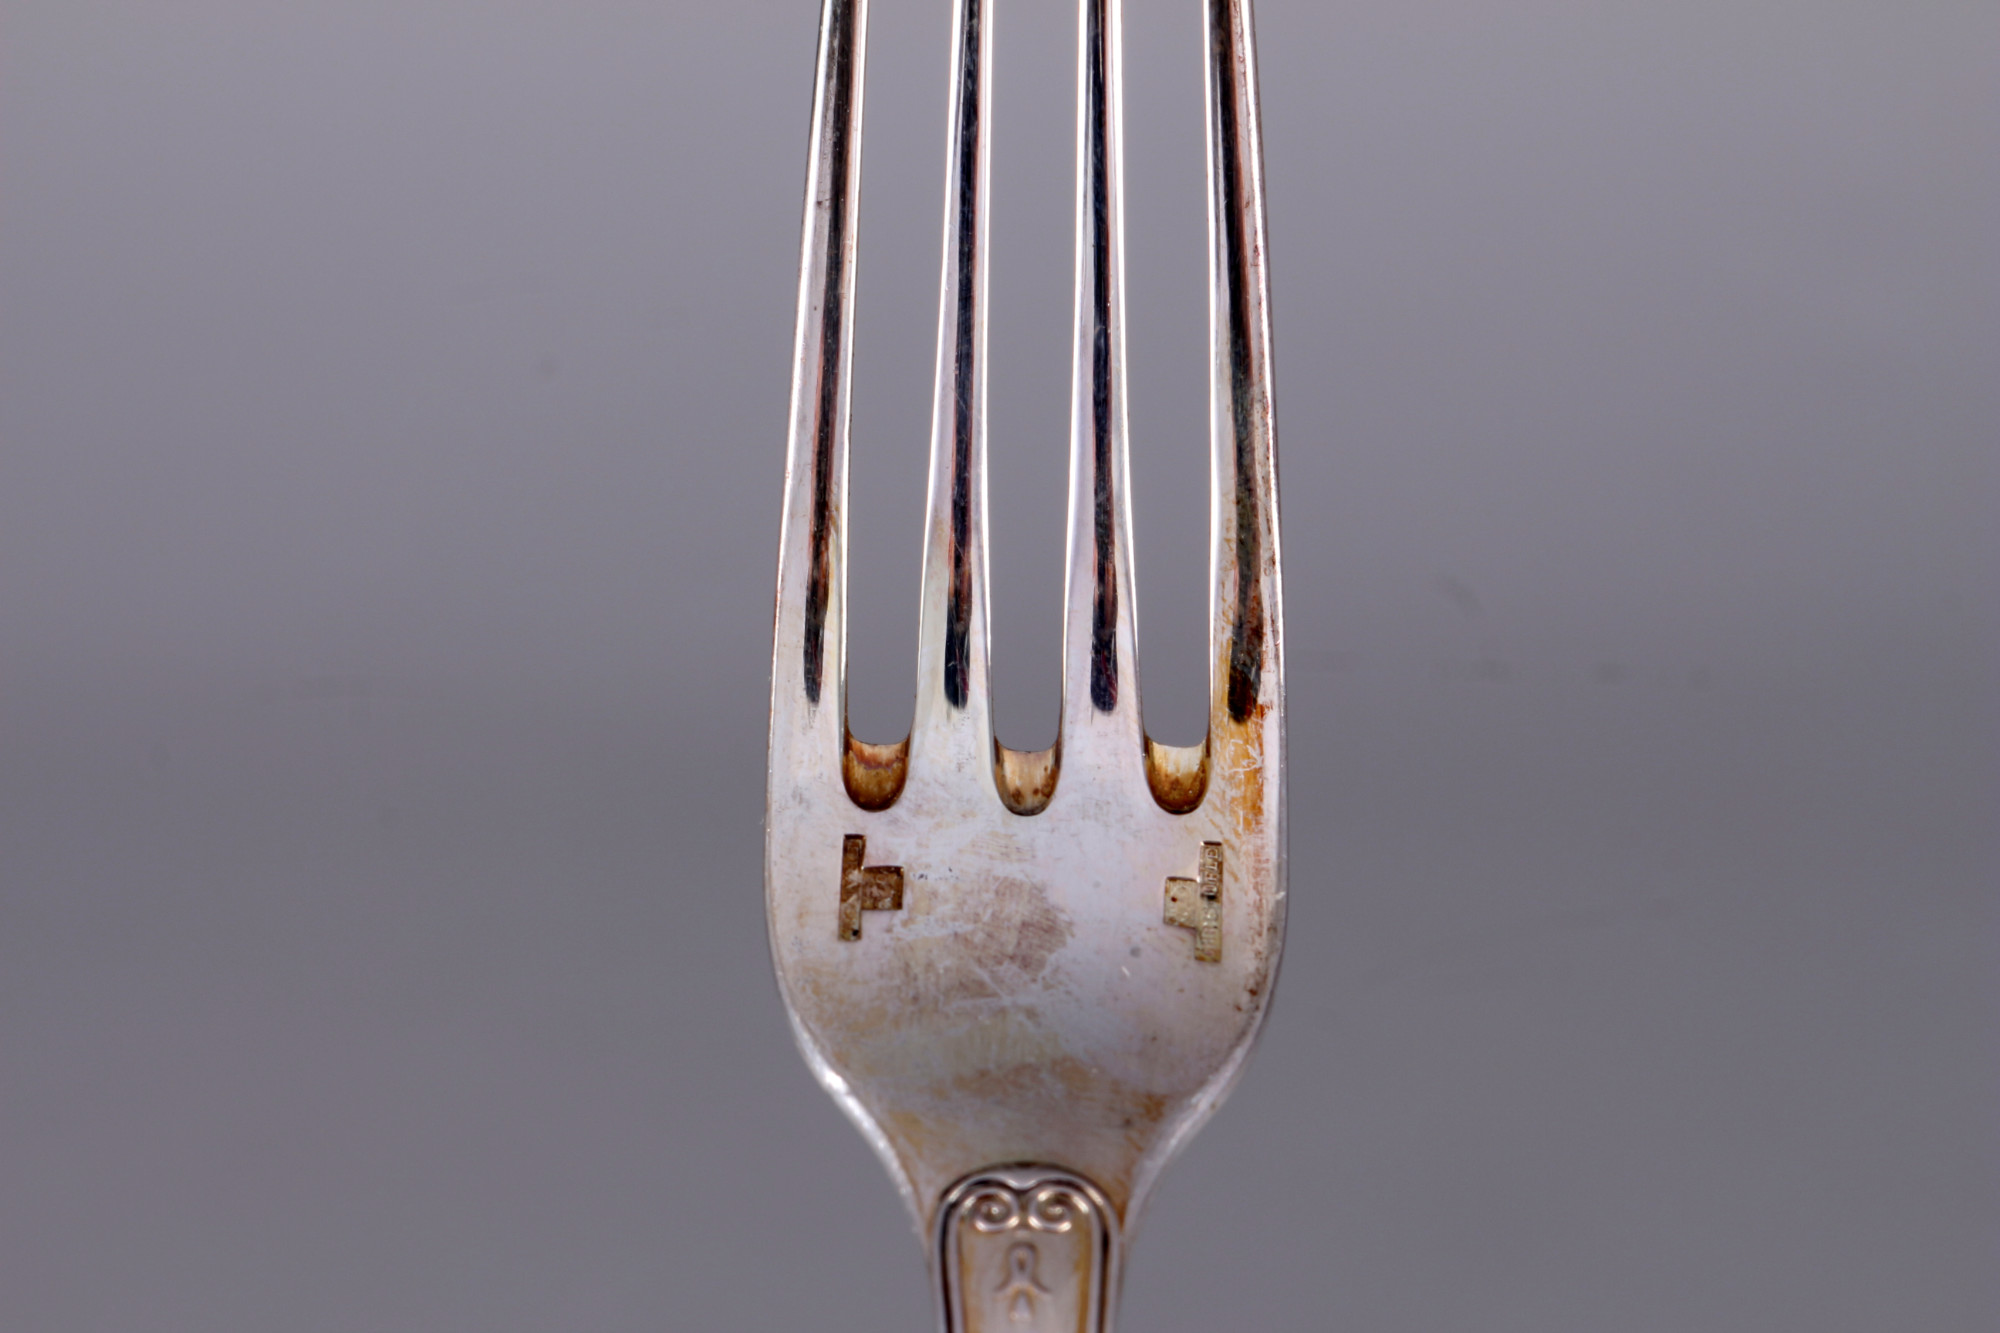 Christofle Malmaison flatware for 6 persons, silver-plated, Besteckset für 6 Personen, - Image 6 of 6